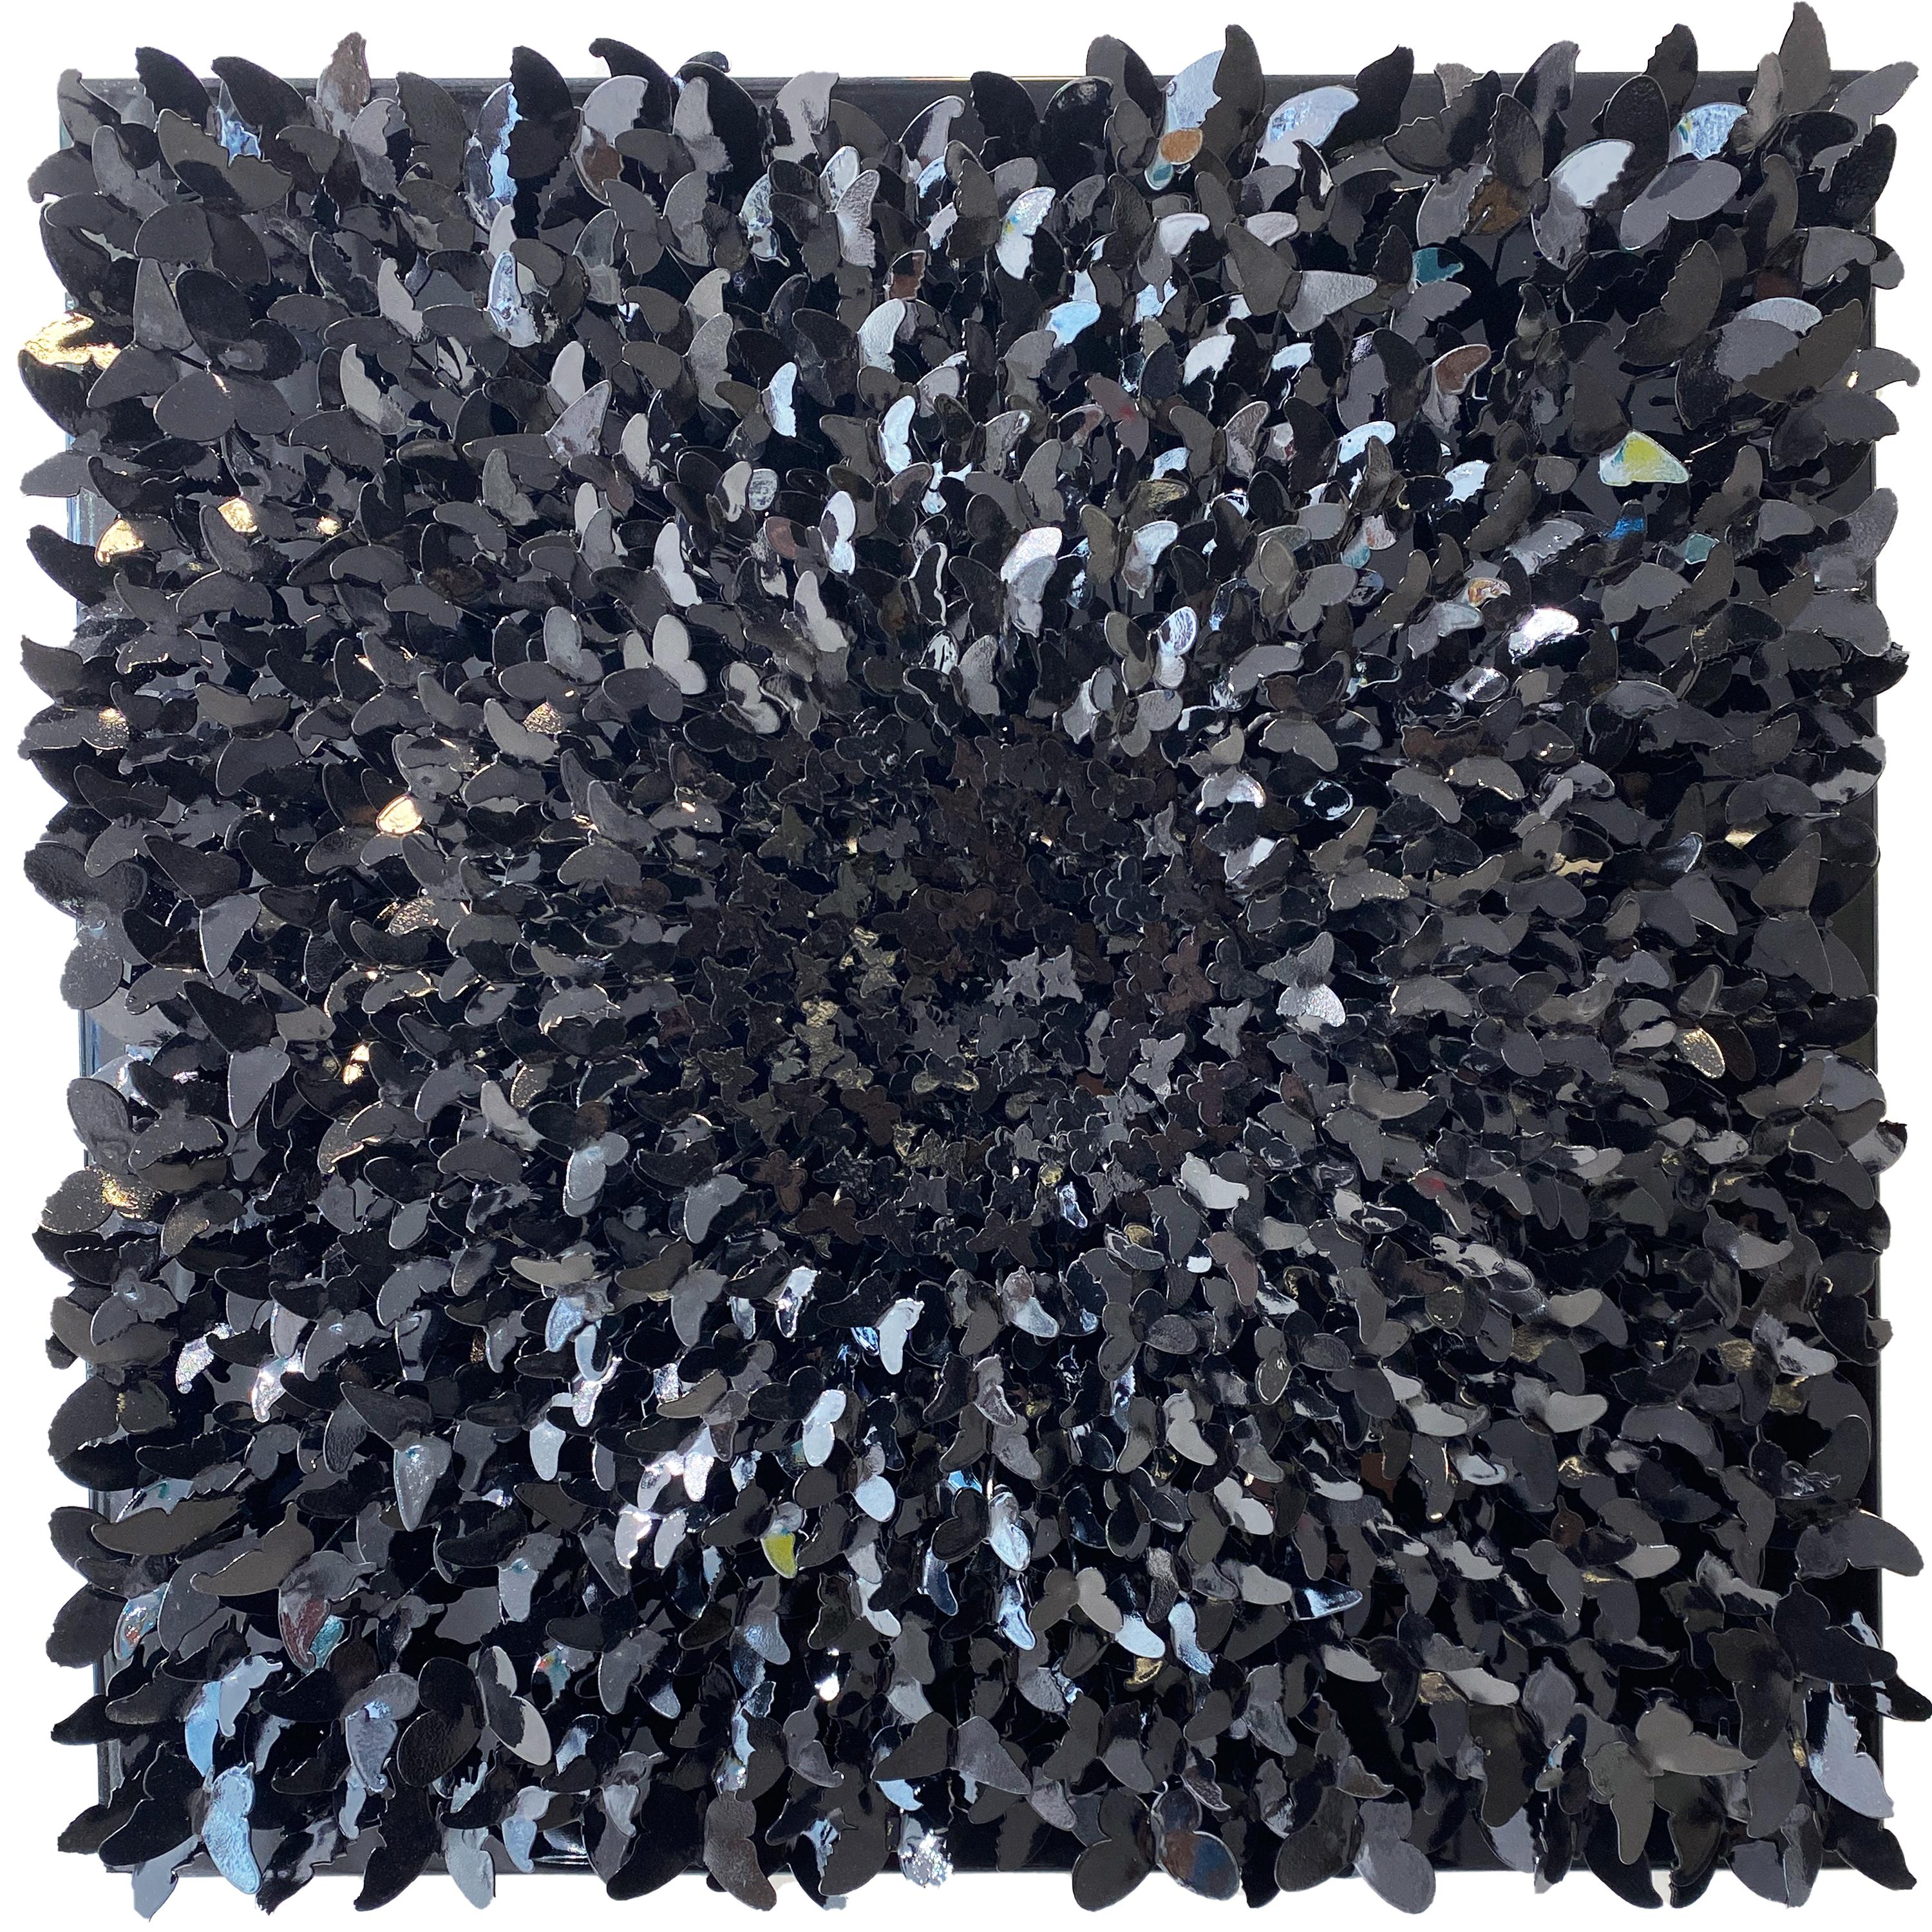 Full Sun (black), Mixed Media Metal Wall Sculpture - Mixed Media Art by Joel Amit